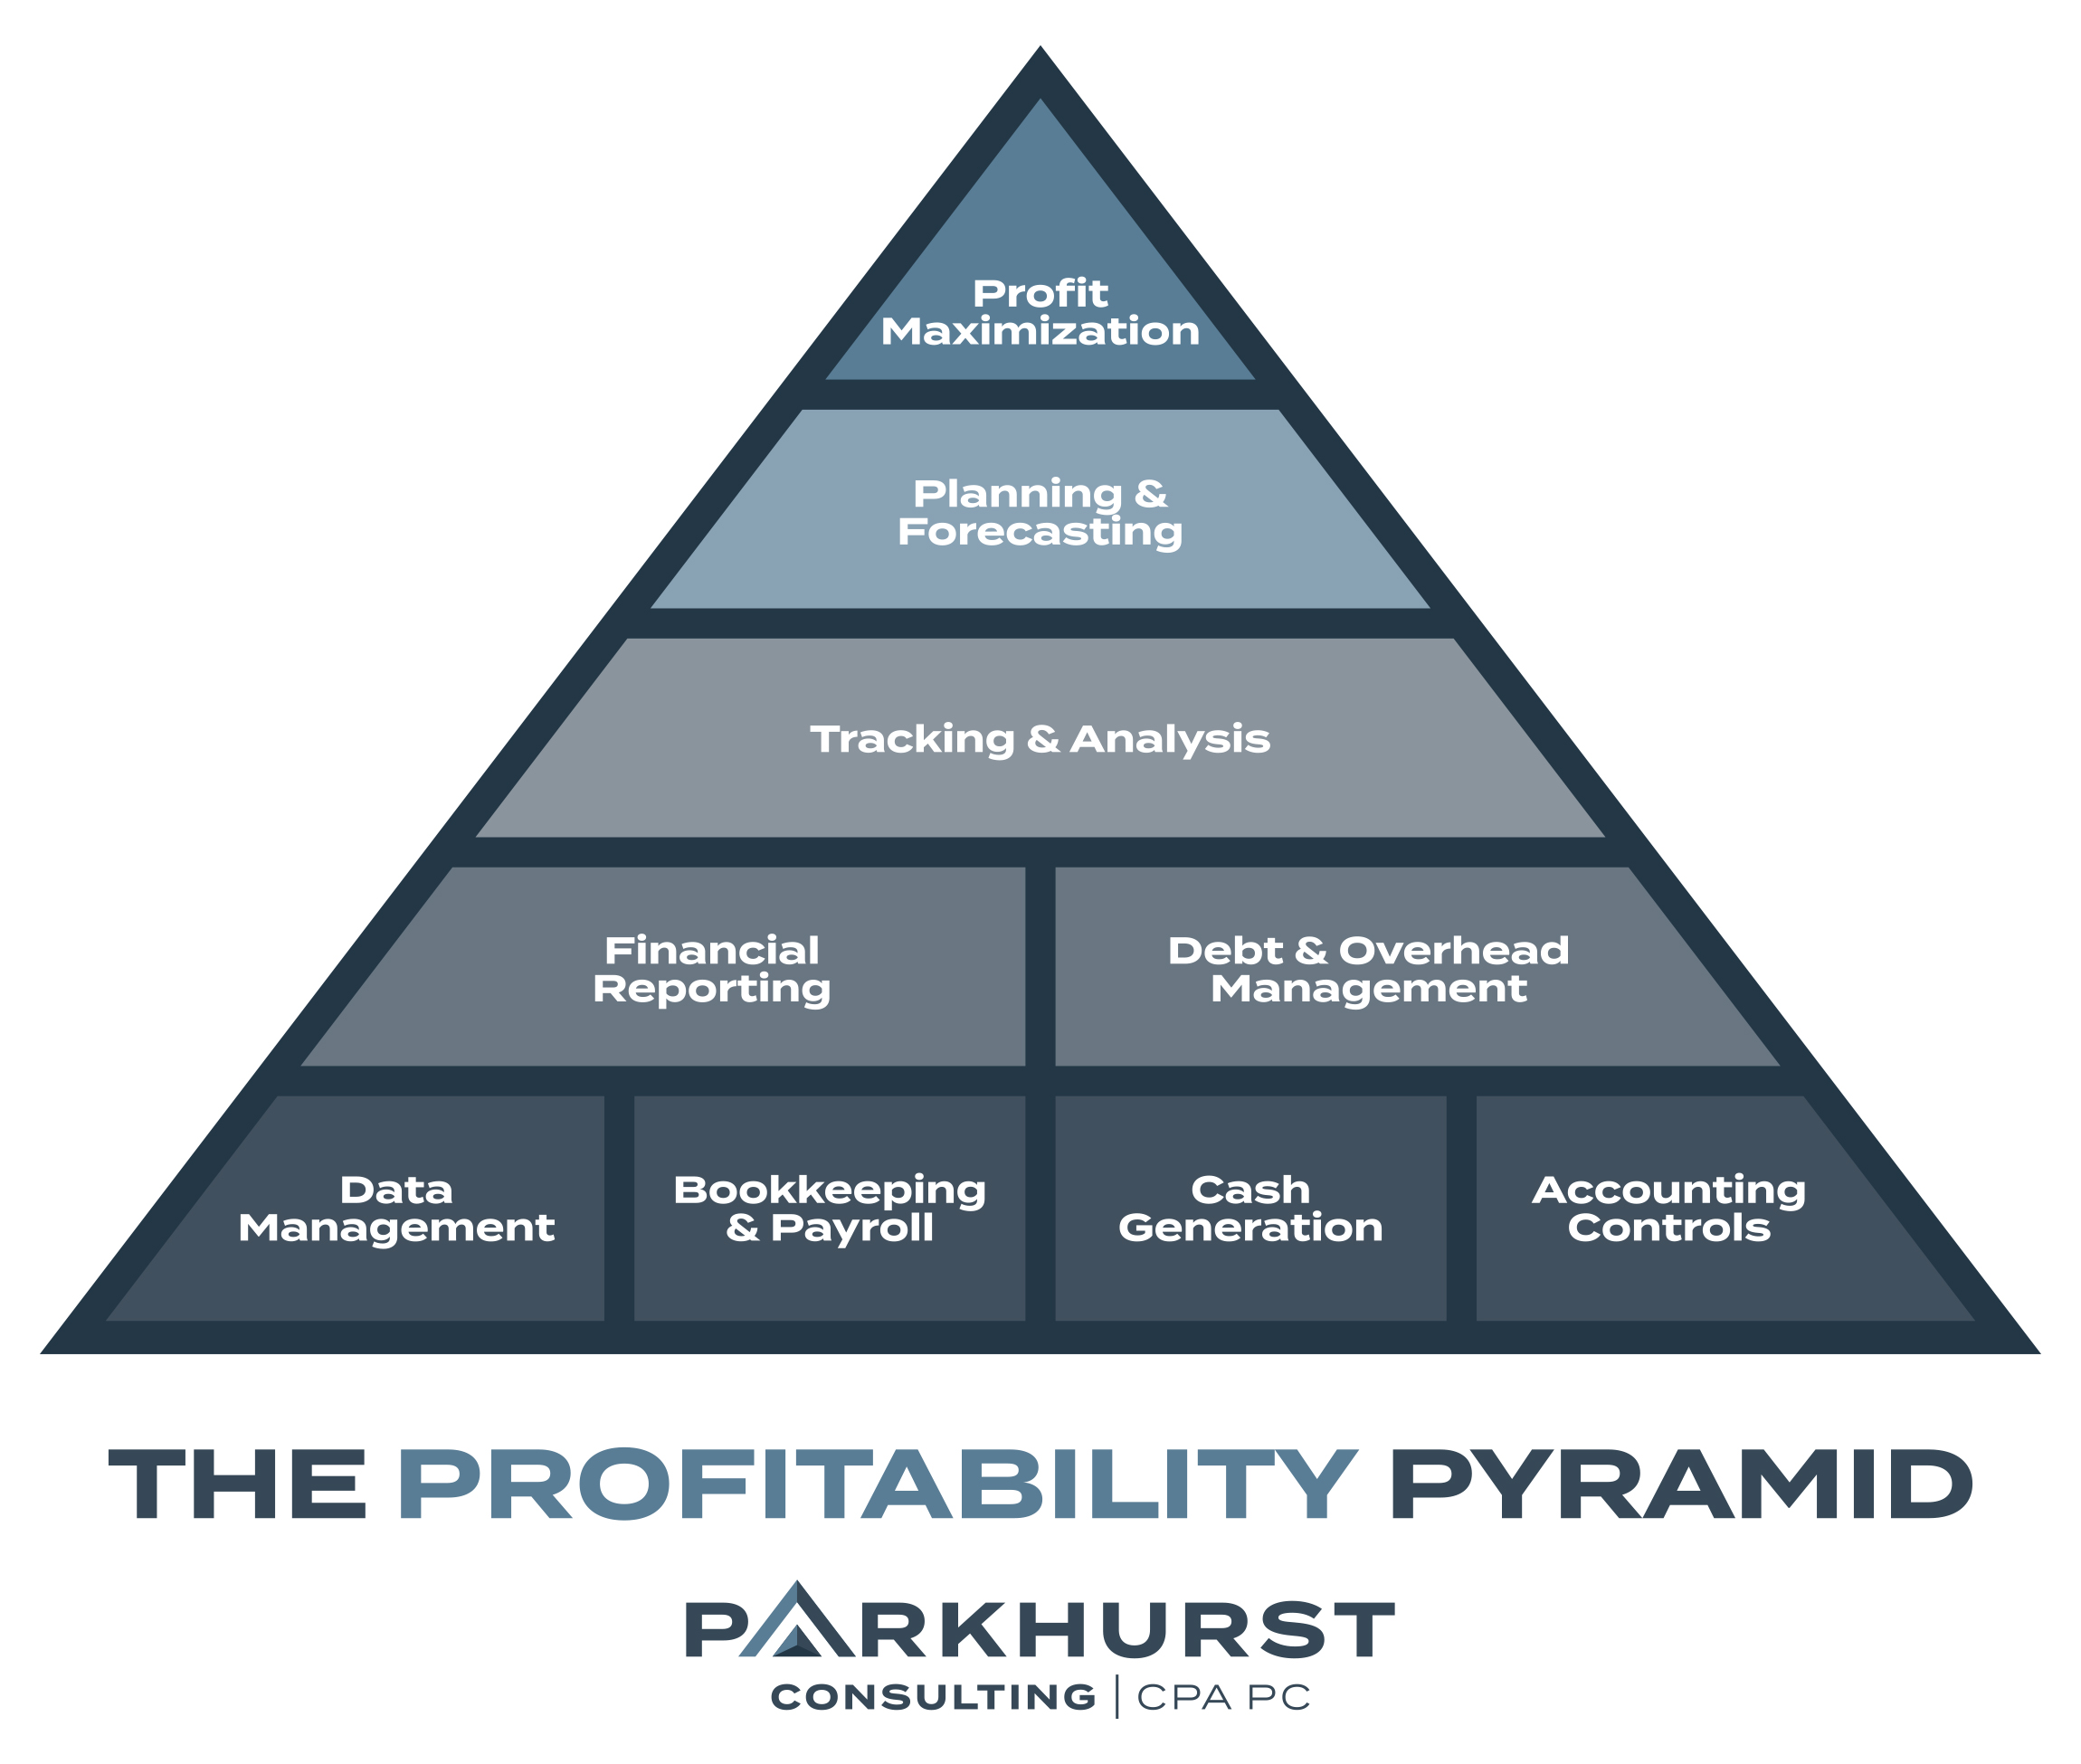 Parkhurst-Profitability Pyramid